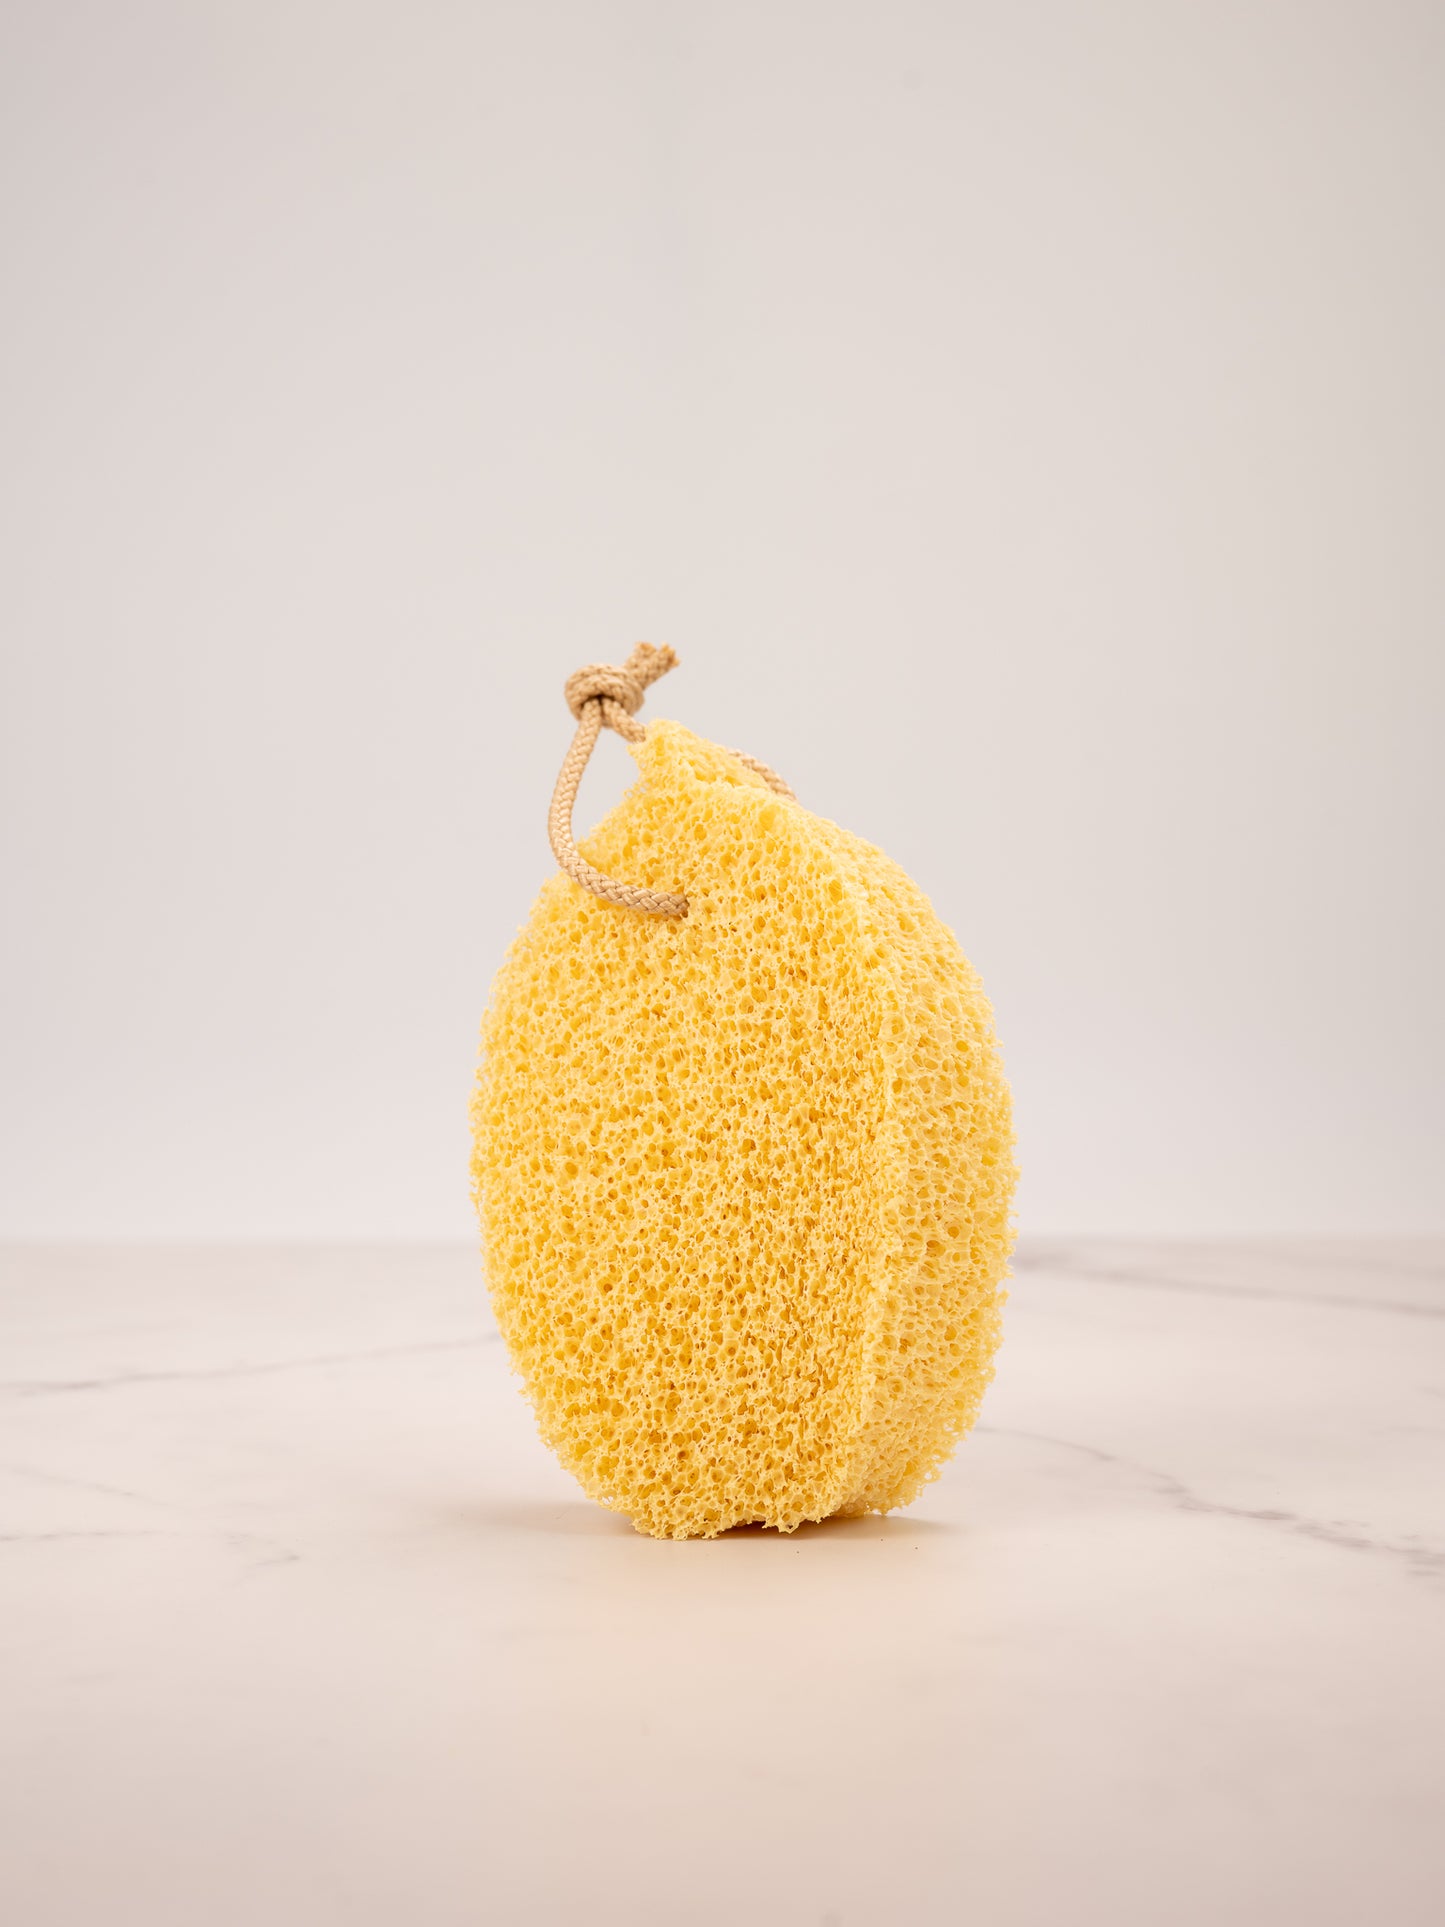 Delicate body sponge with olive oil - Idea Toscana 